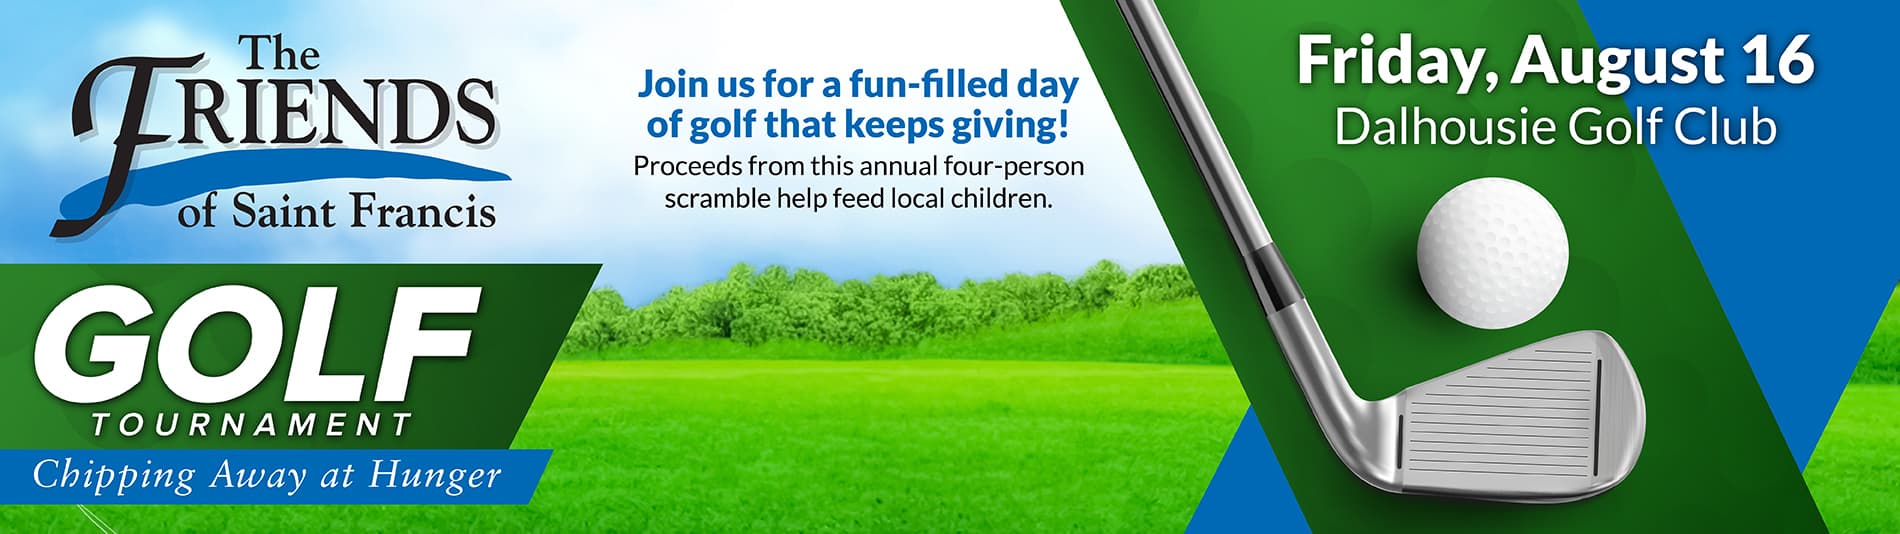 The Friends Golf Tournament - August 16 at Dalhousie Golf Club!